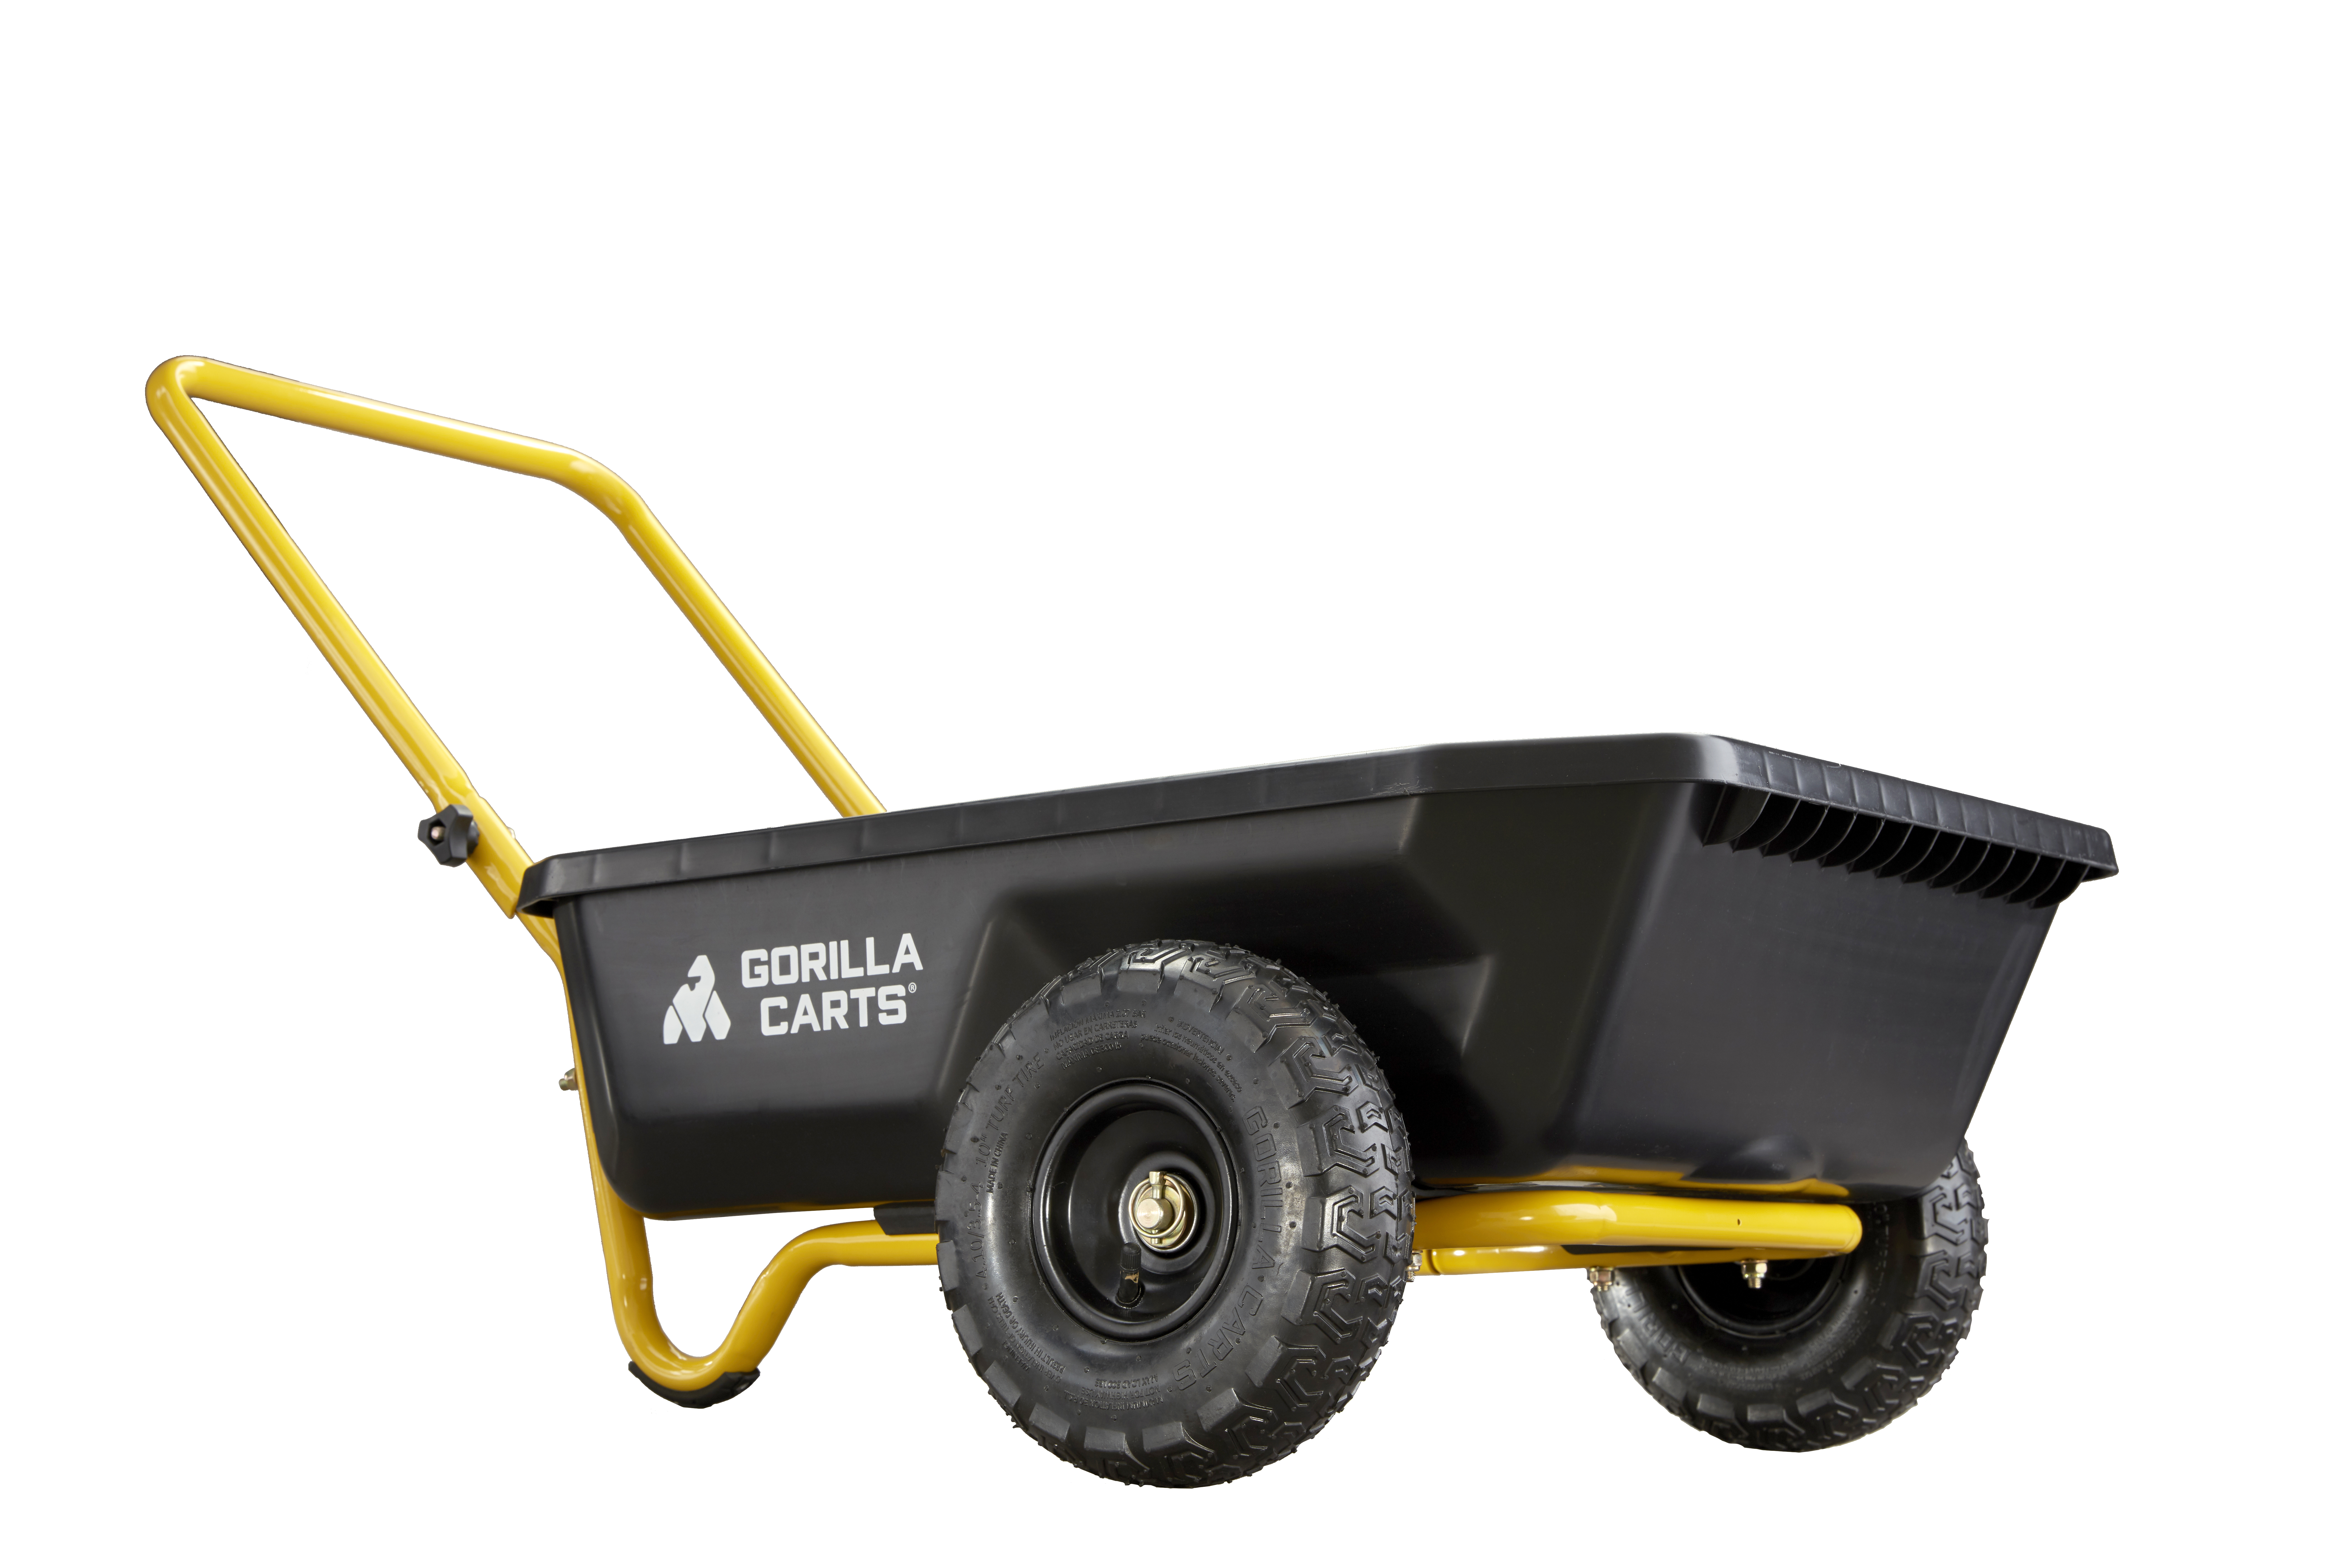 Gorilla Carts GCR-4 4 cu. ft. Poly Yard Cart, 300-Pound Capacity, Black - image 3 of 12